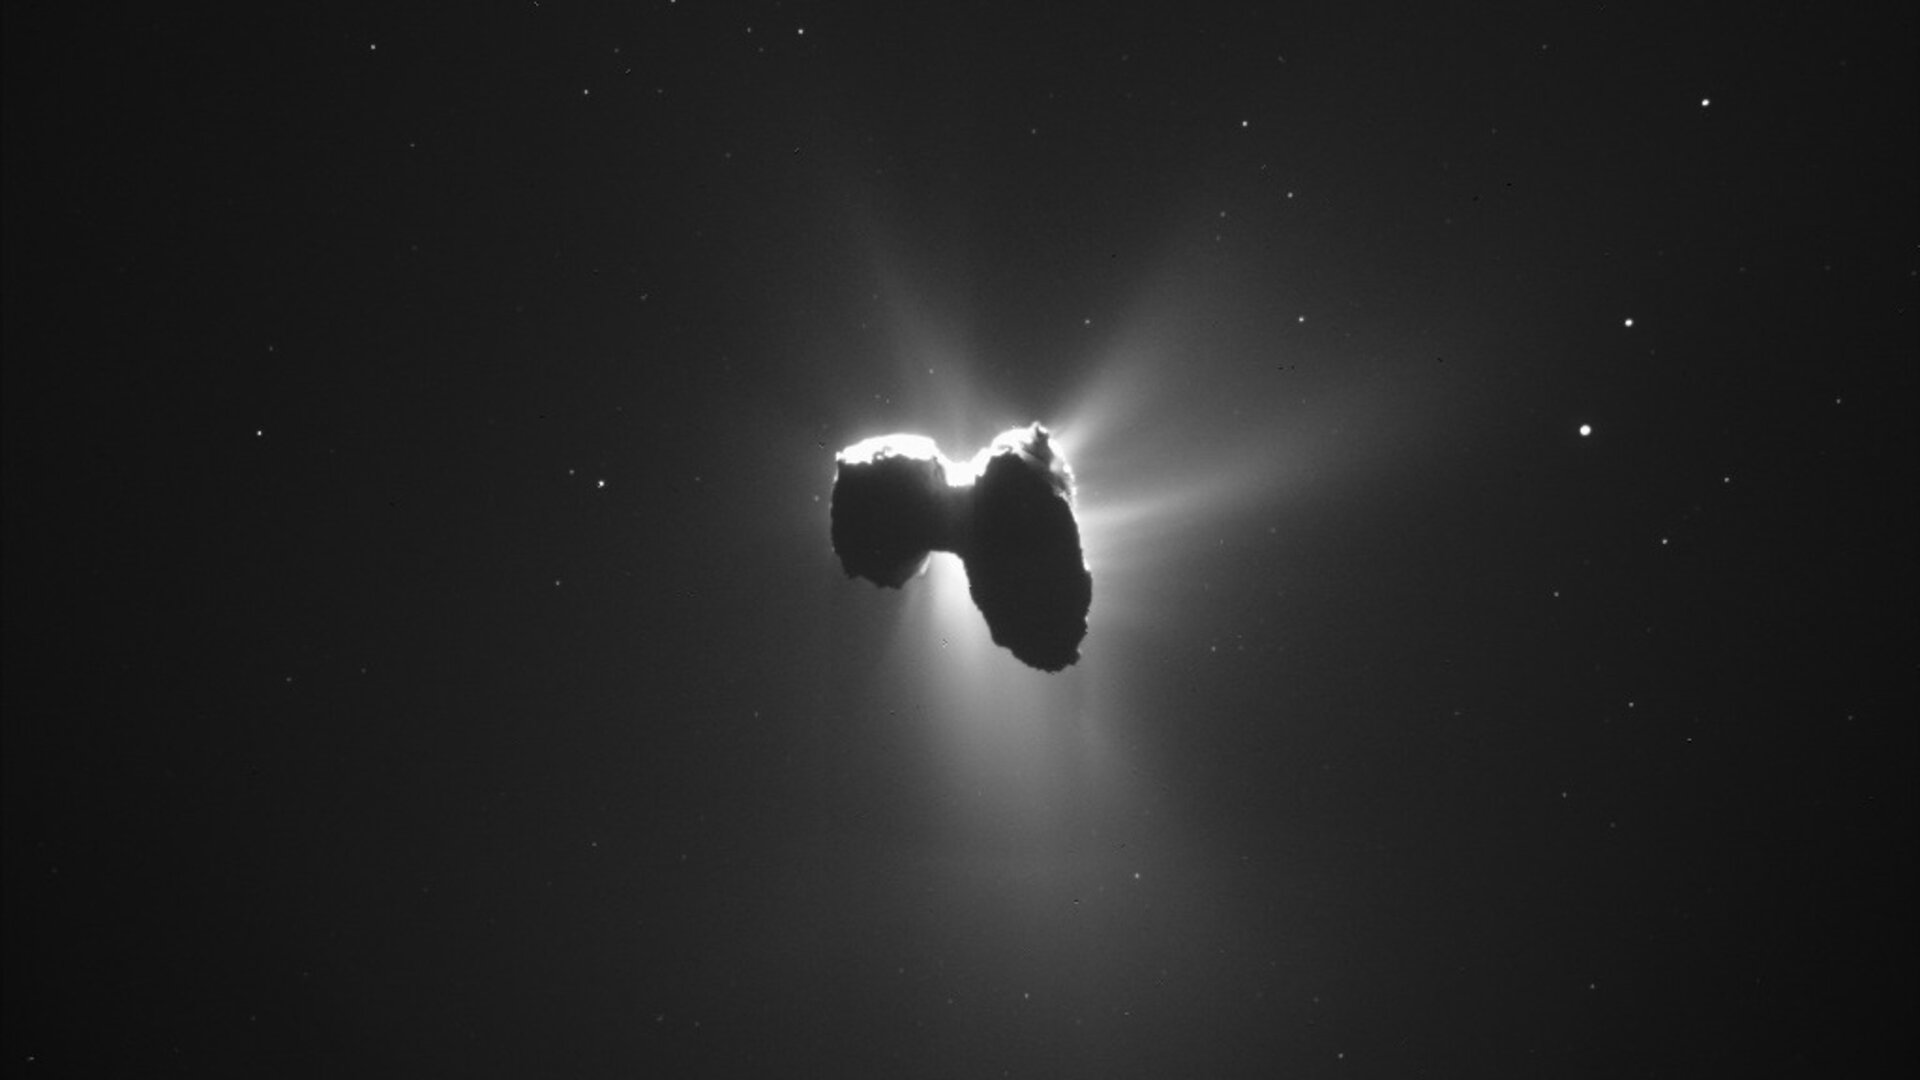 Rosetta's distinctive dual-lobe comet